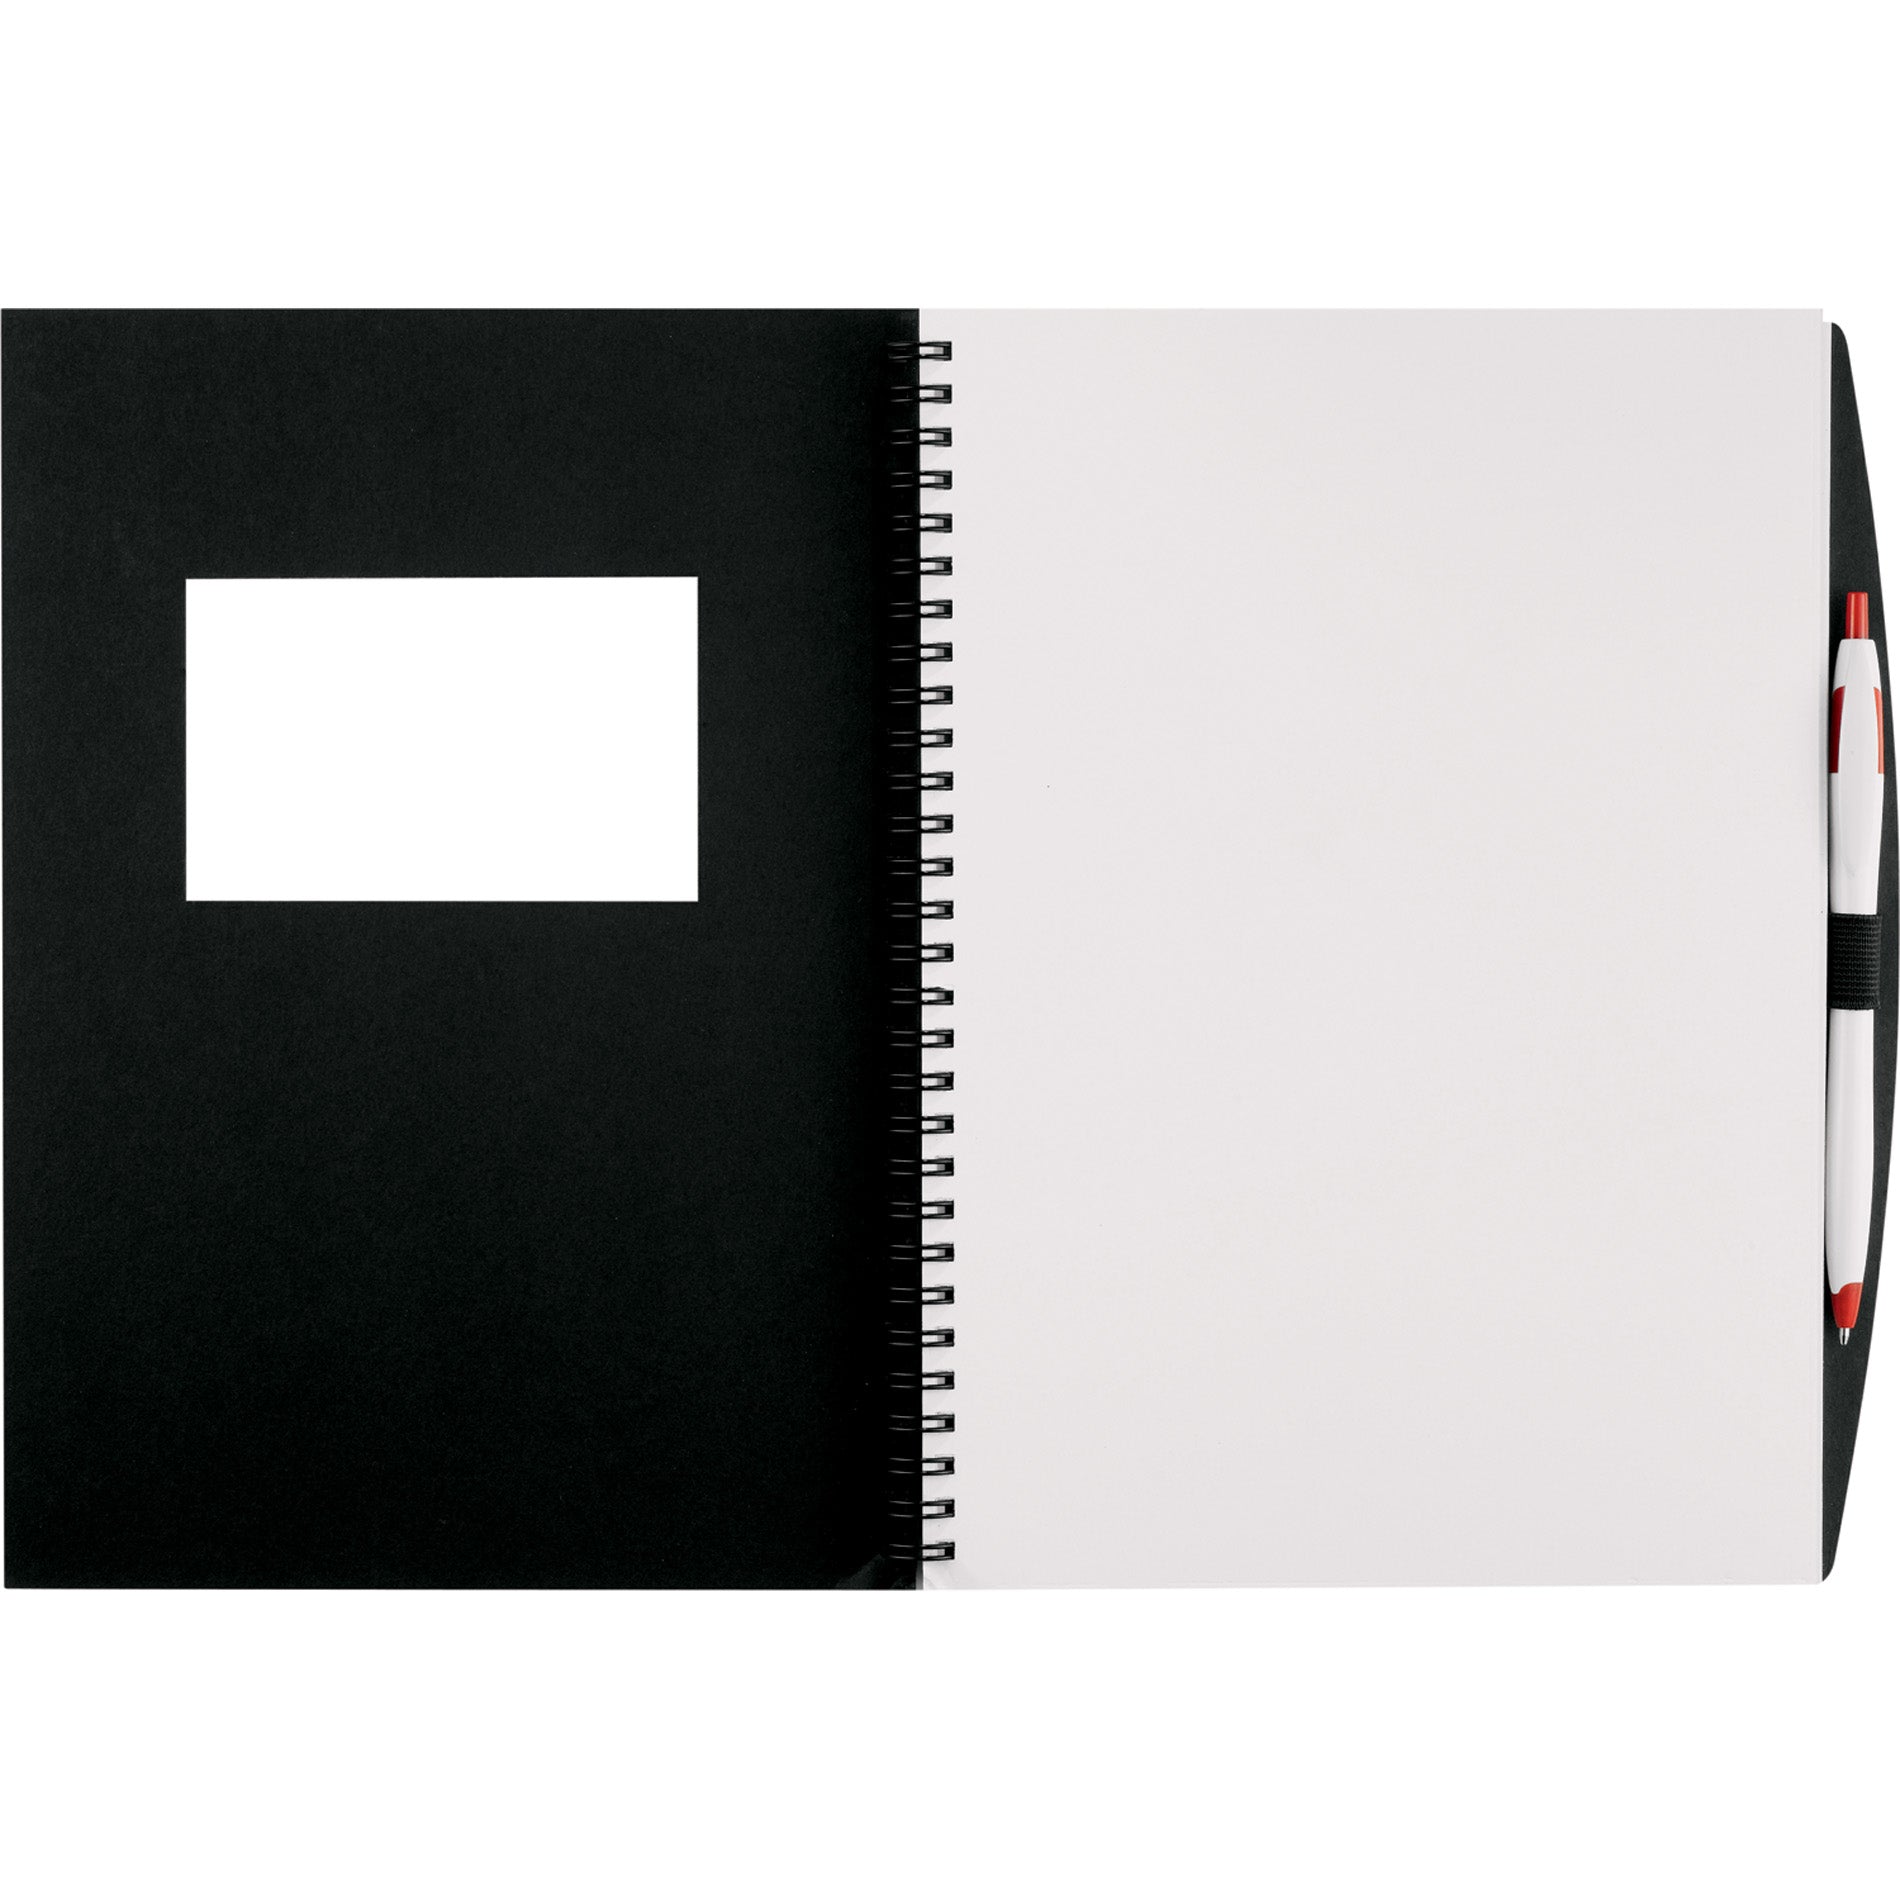 Frame Rectangle Large Hardcover JournalBook 2700 Black